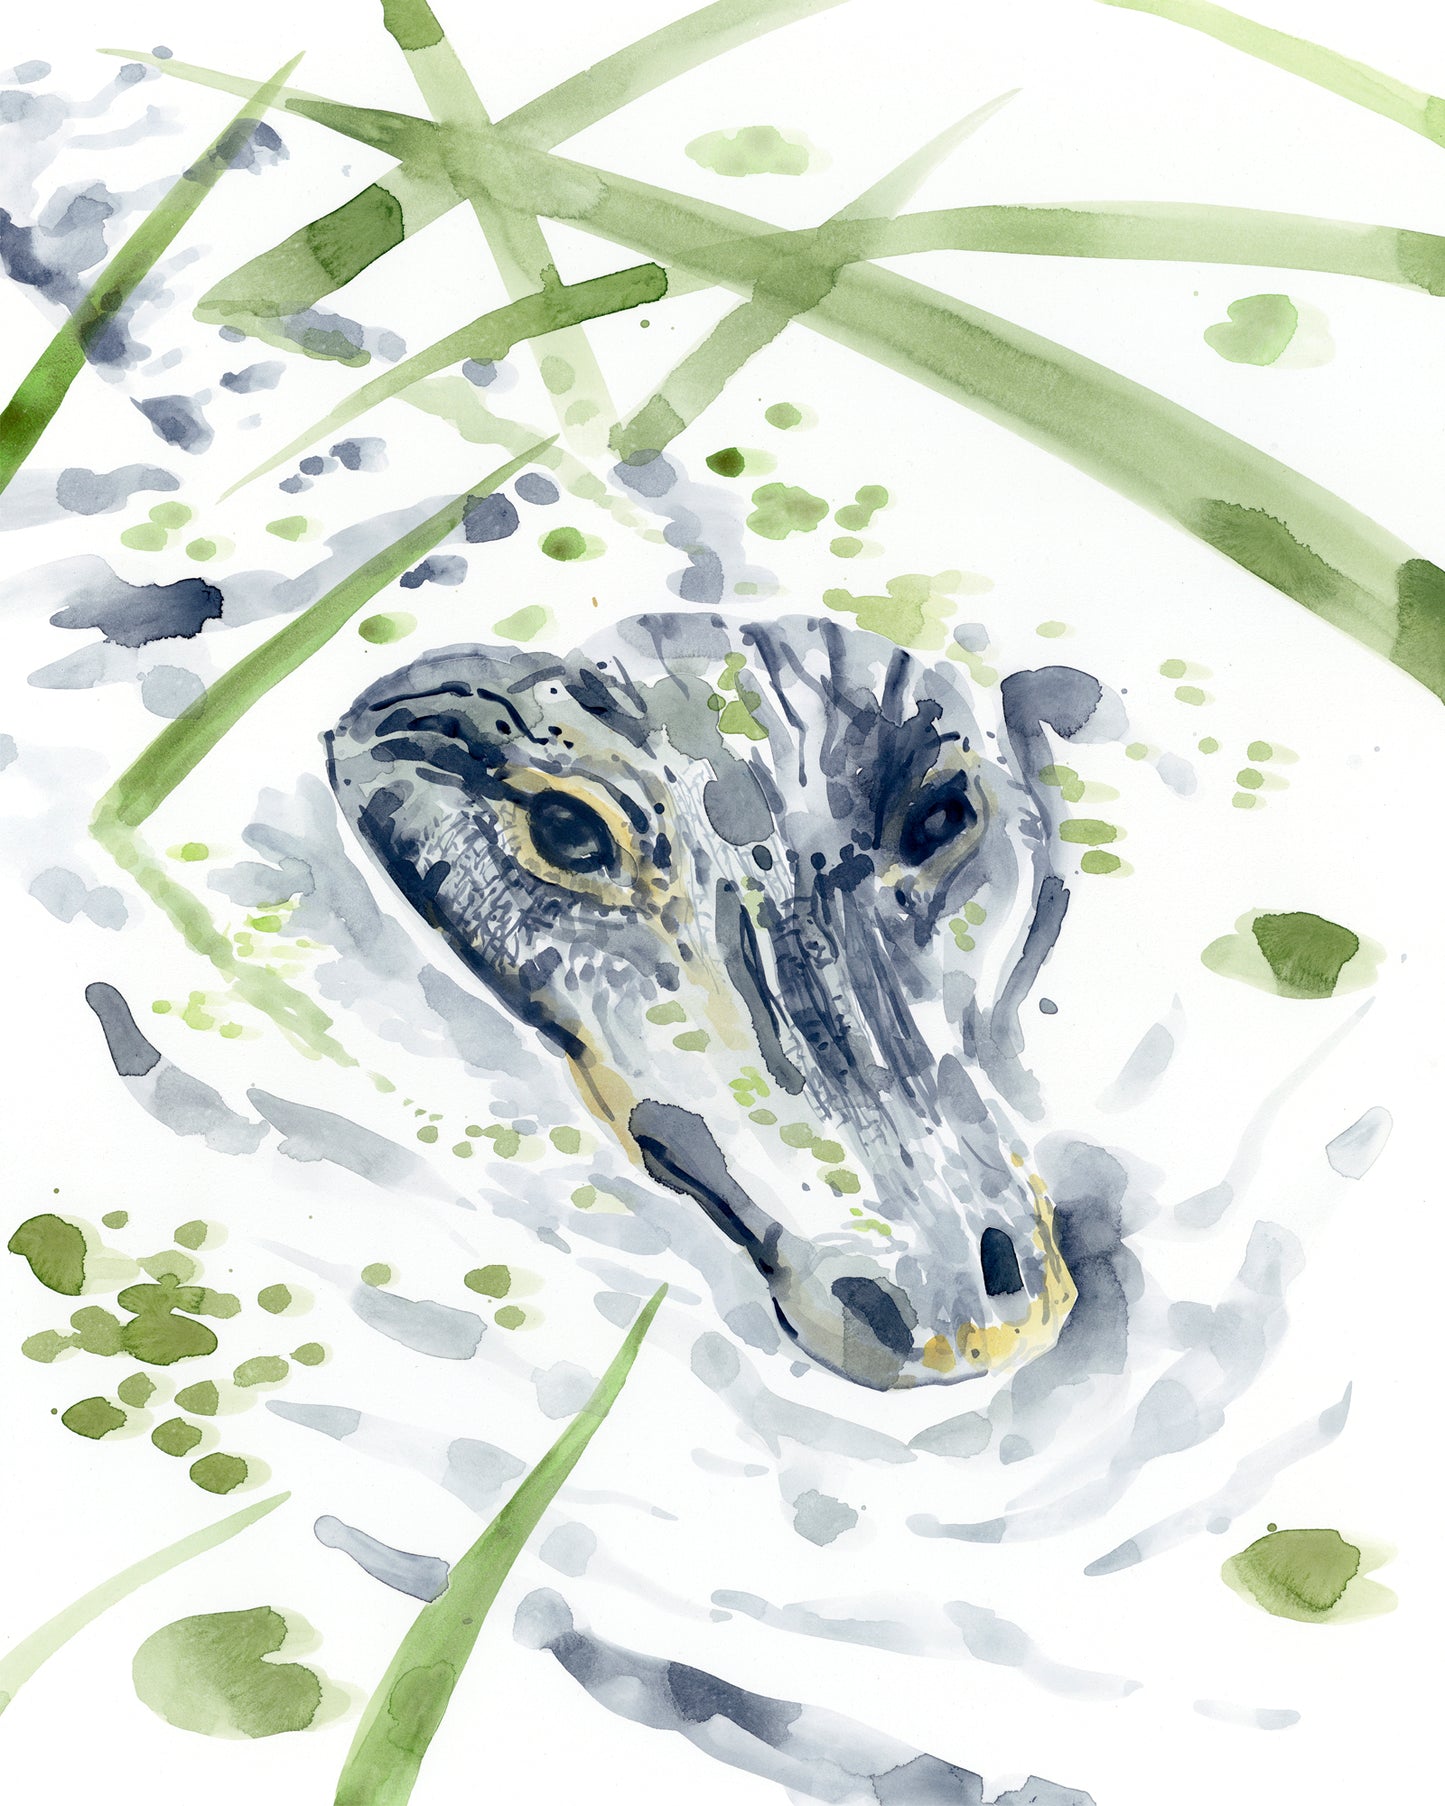 Alligator in the reeds